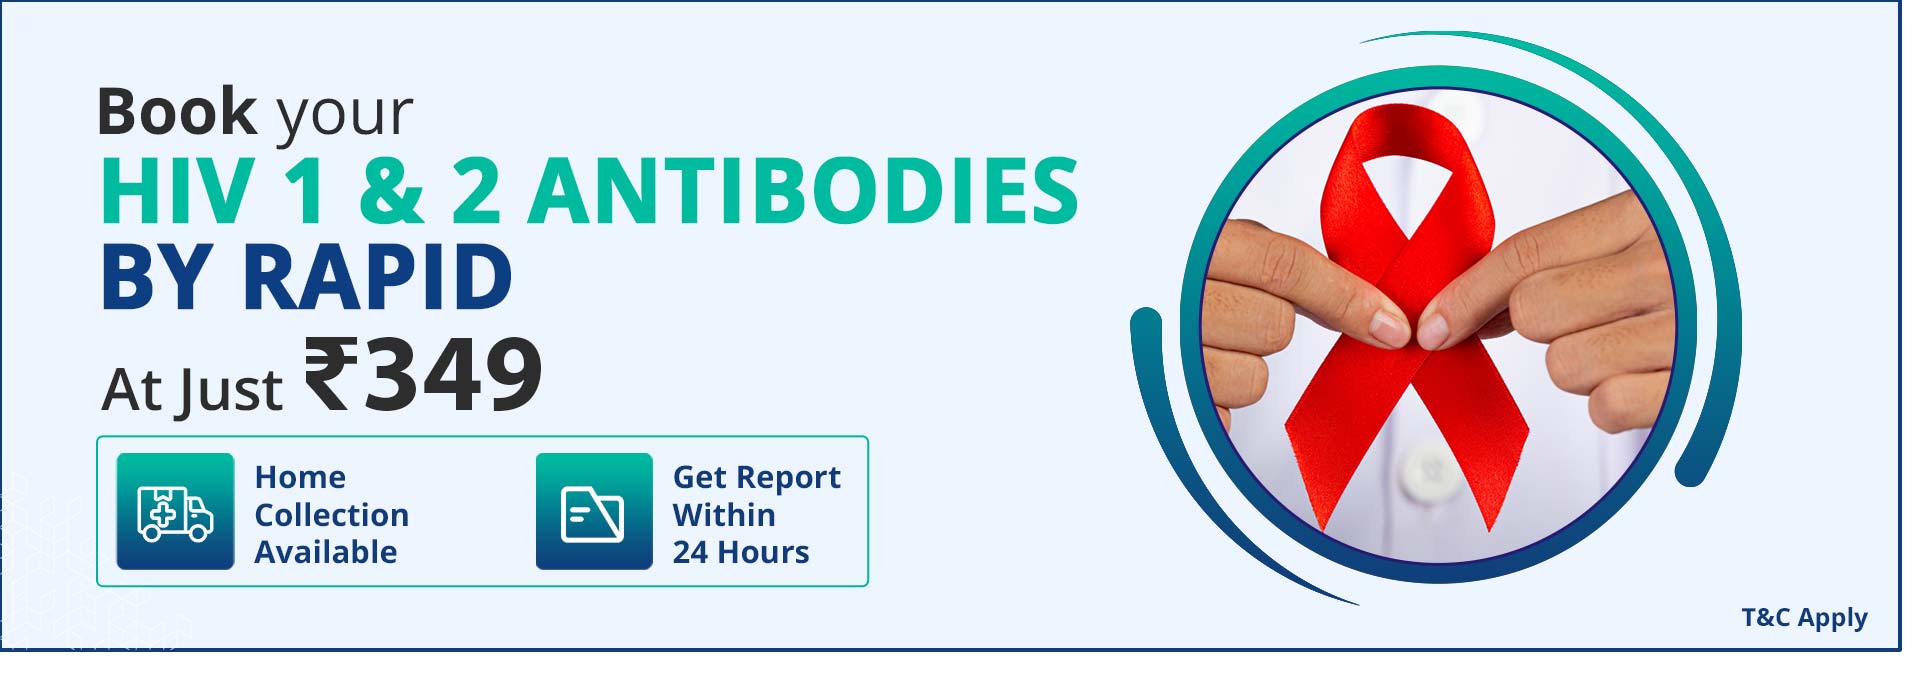 HIV 1 & 2 Antibodies by Rapid